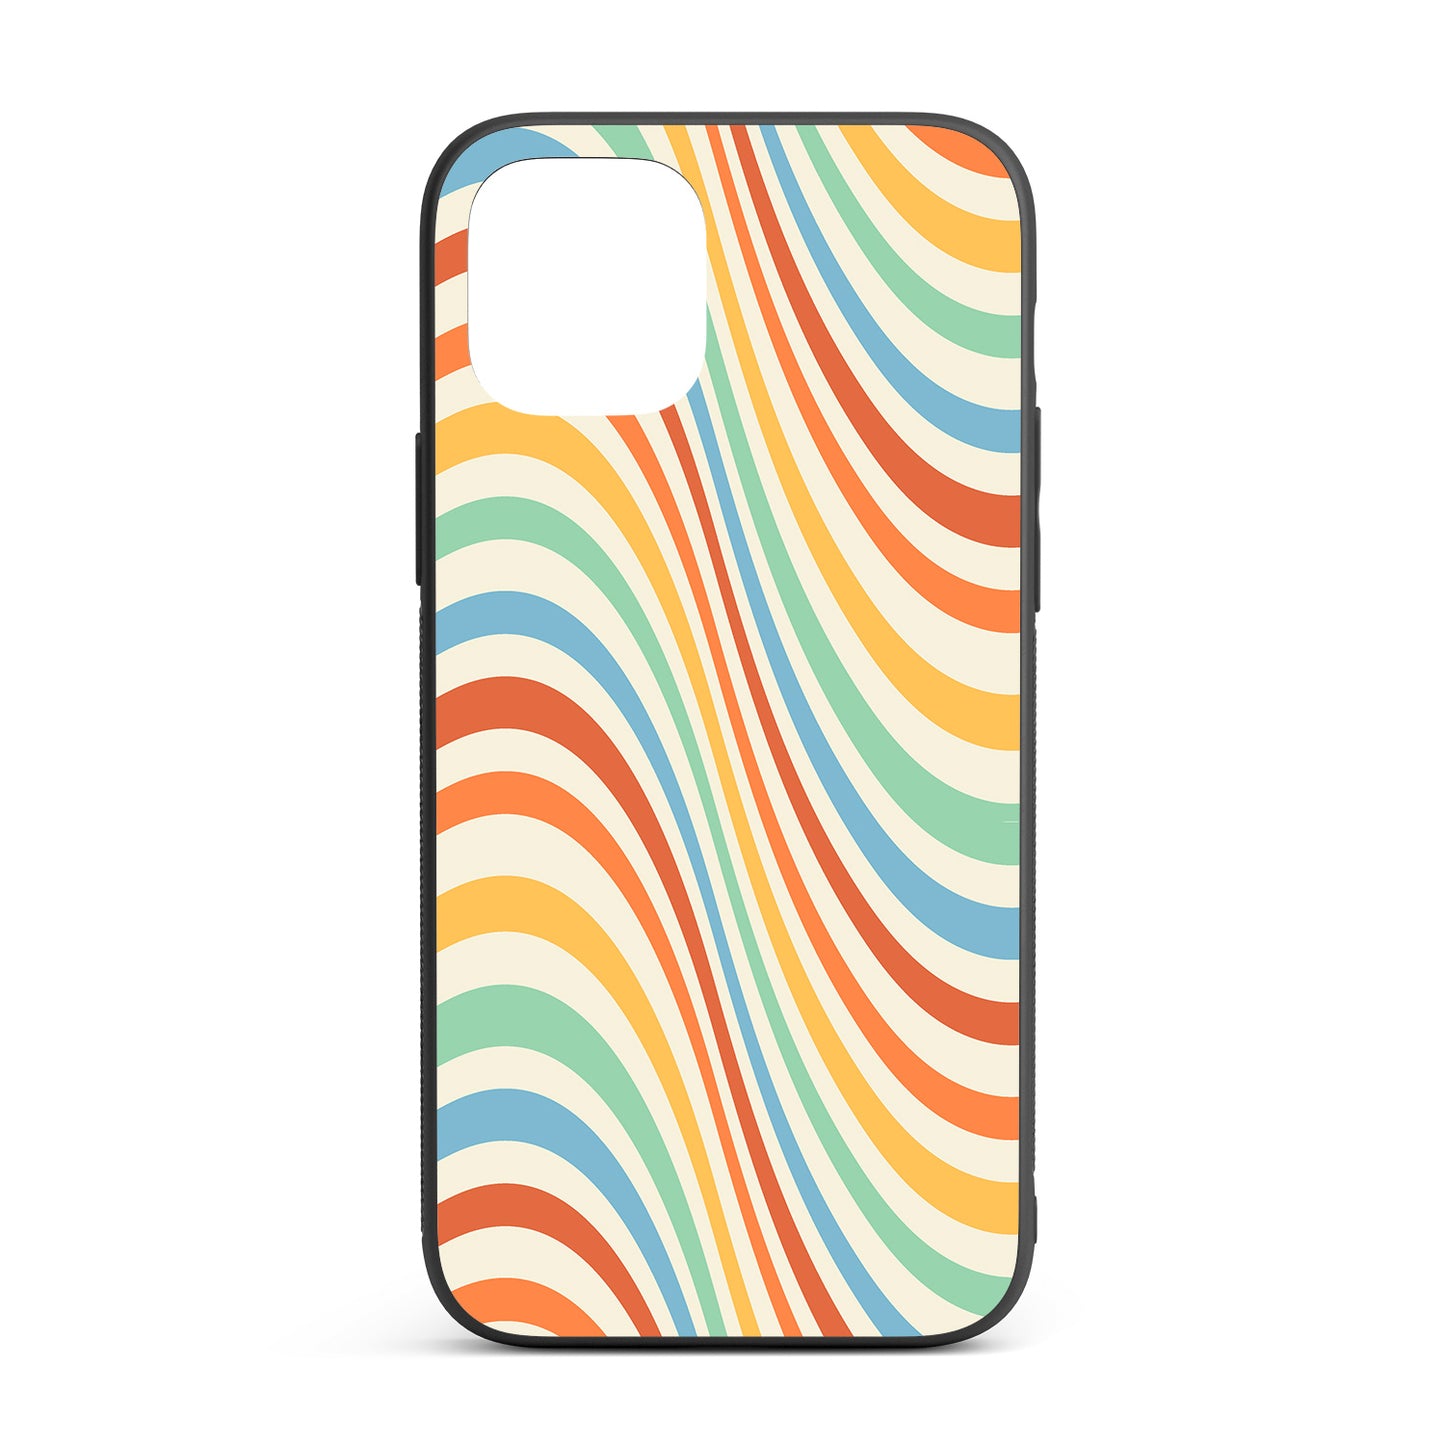 Retro Swirl iPhone glass case